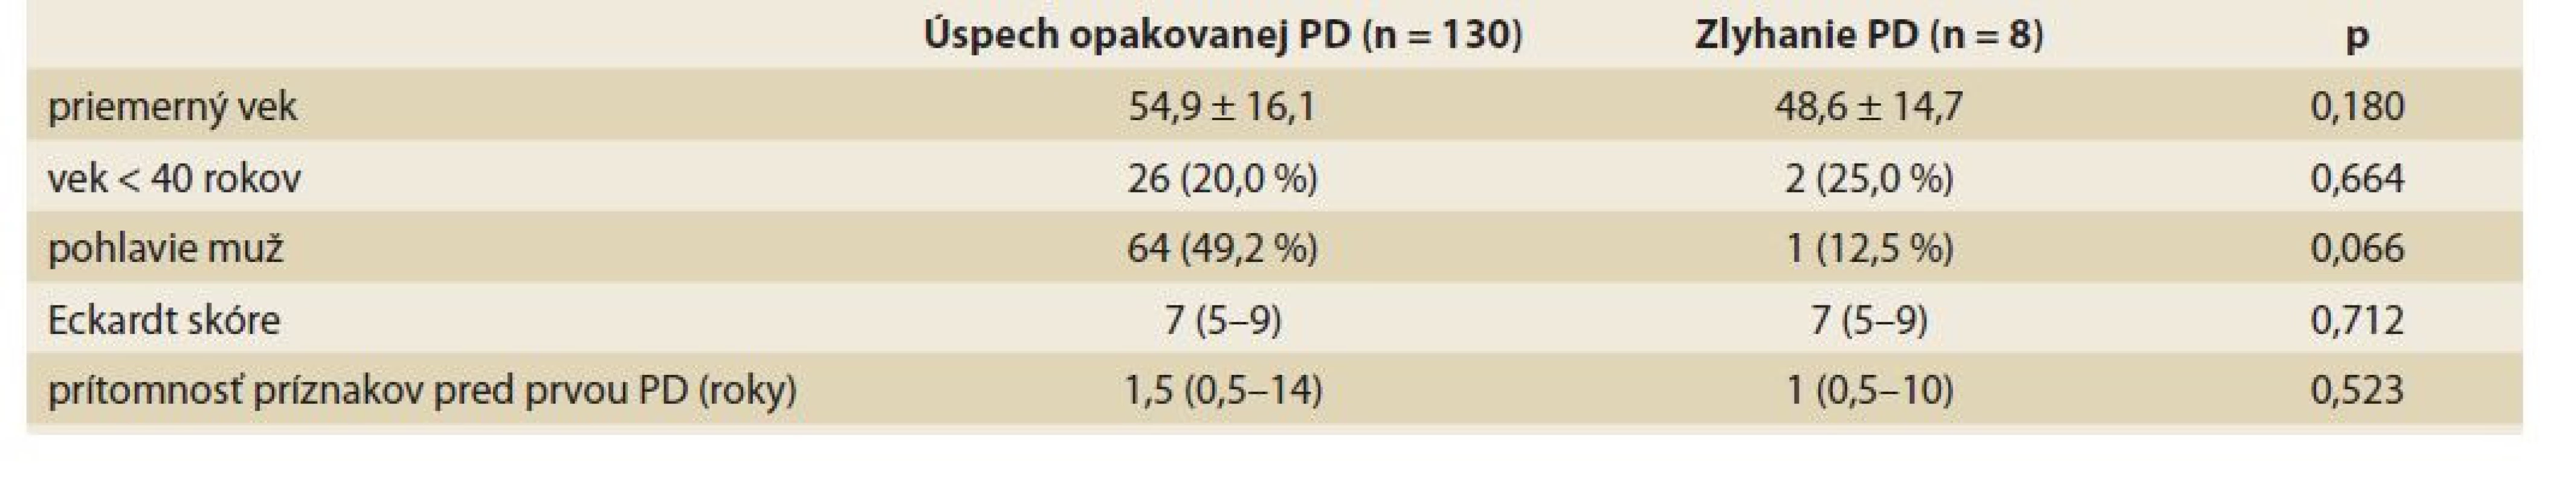 Úspech pneumatickej dilatácie (PD) v súvislosti s klinickými parametrami.<br>
Tab. 6. Success of pneumatic dilation (PD) therapy in relation to clinical parameters.